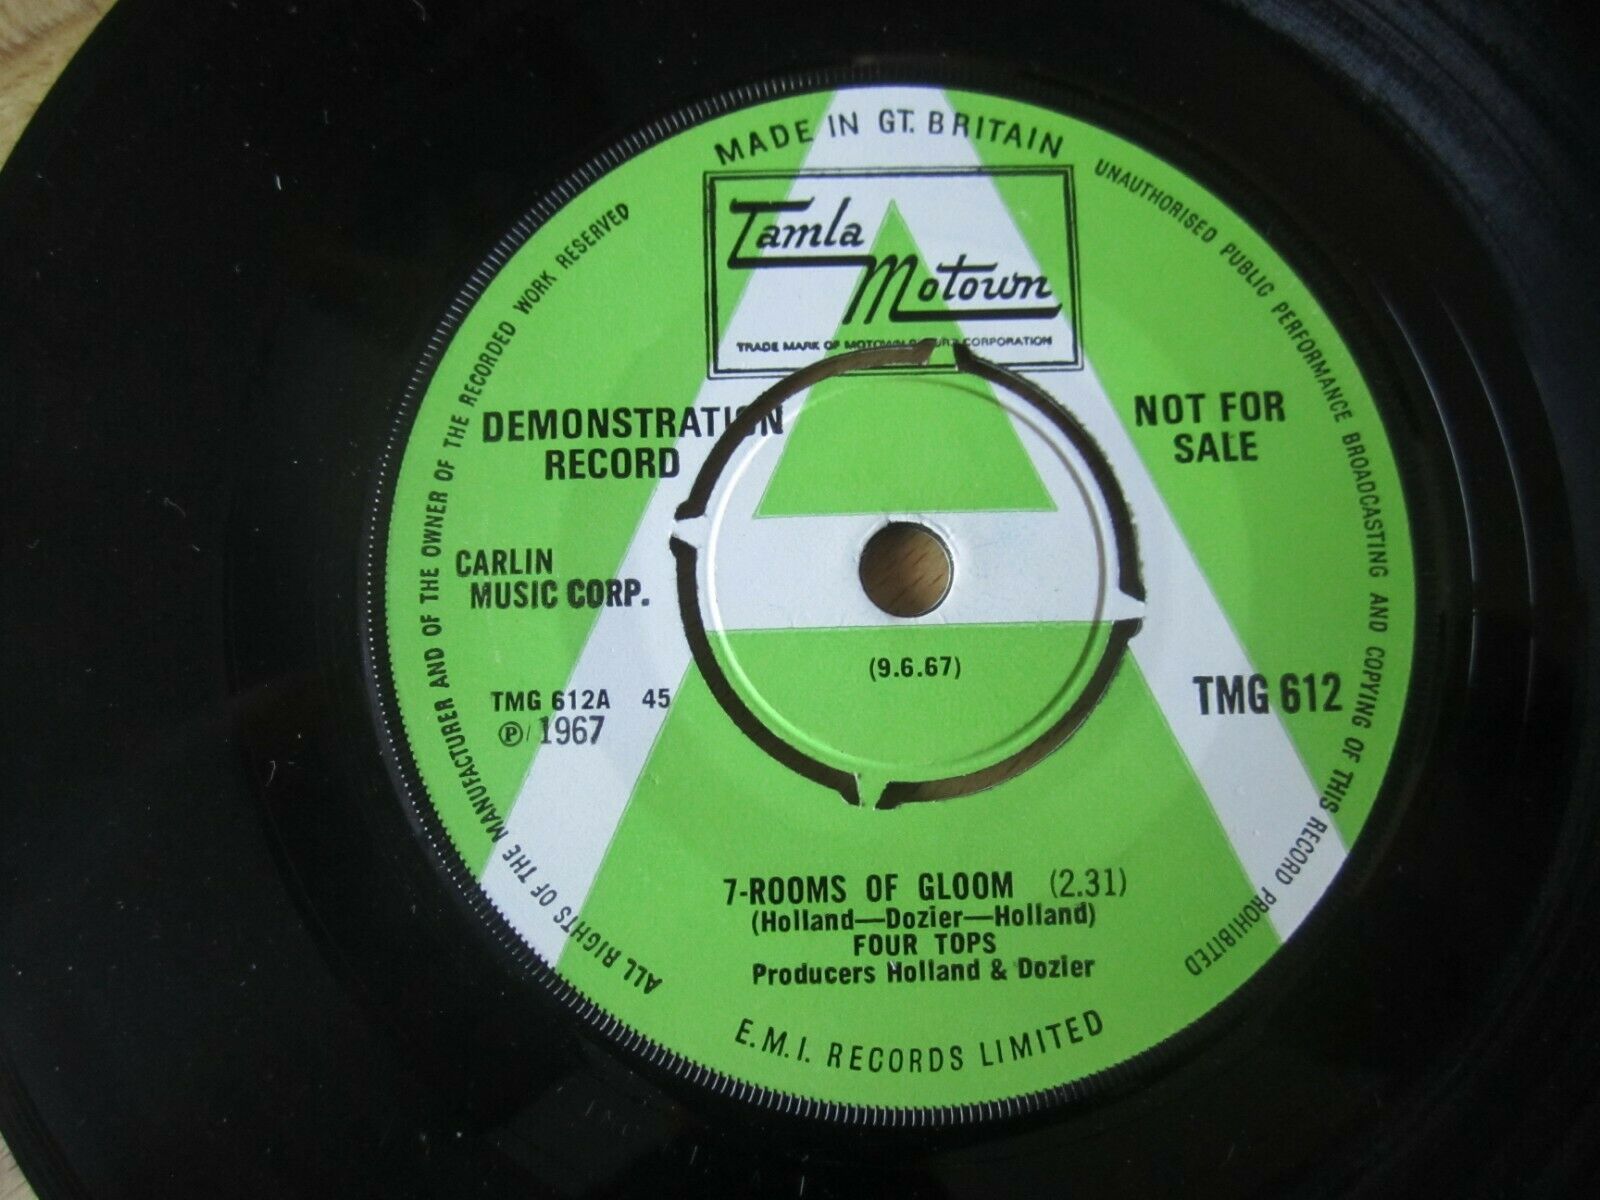 Four Tops - 7 Rooms of Gloom TMG 612 Tamla Motown Demo